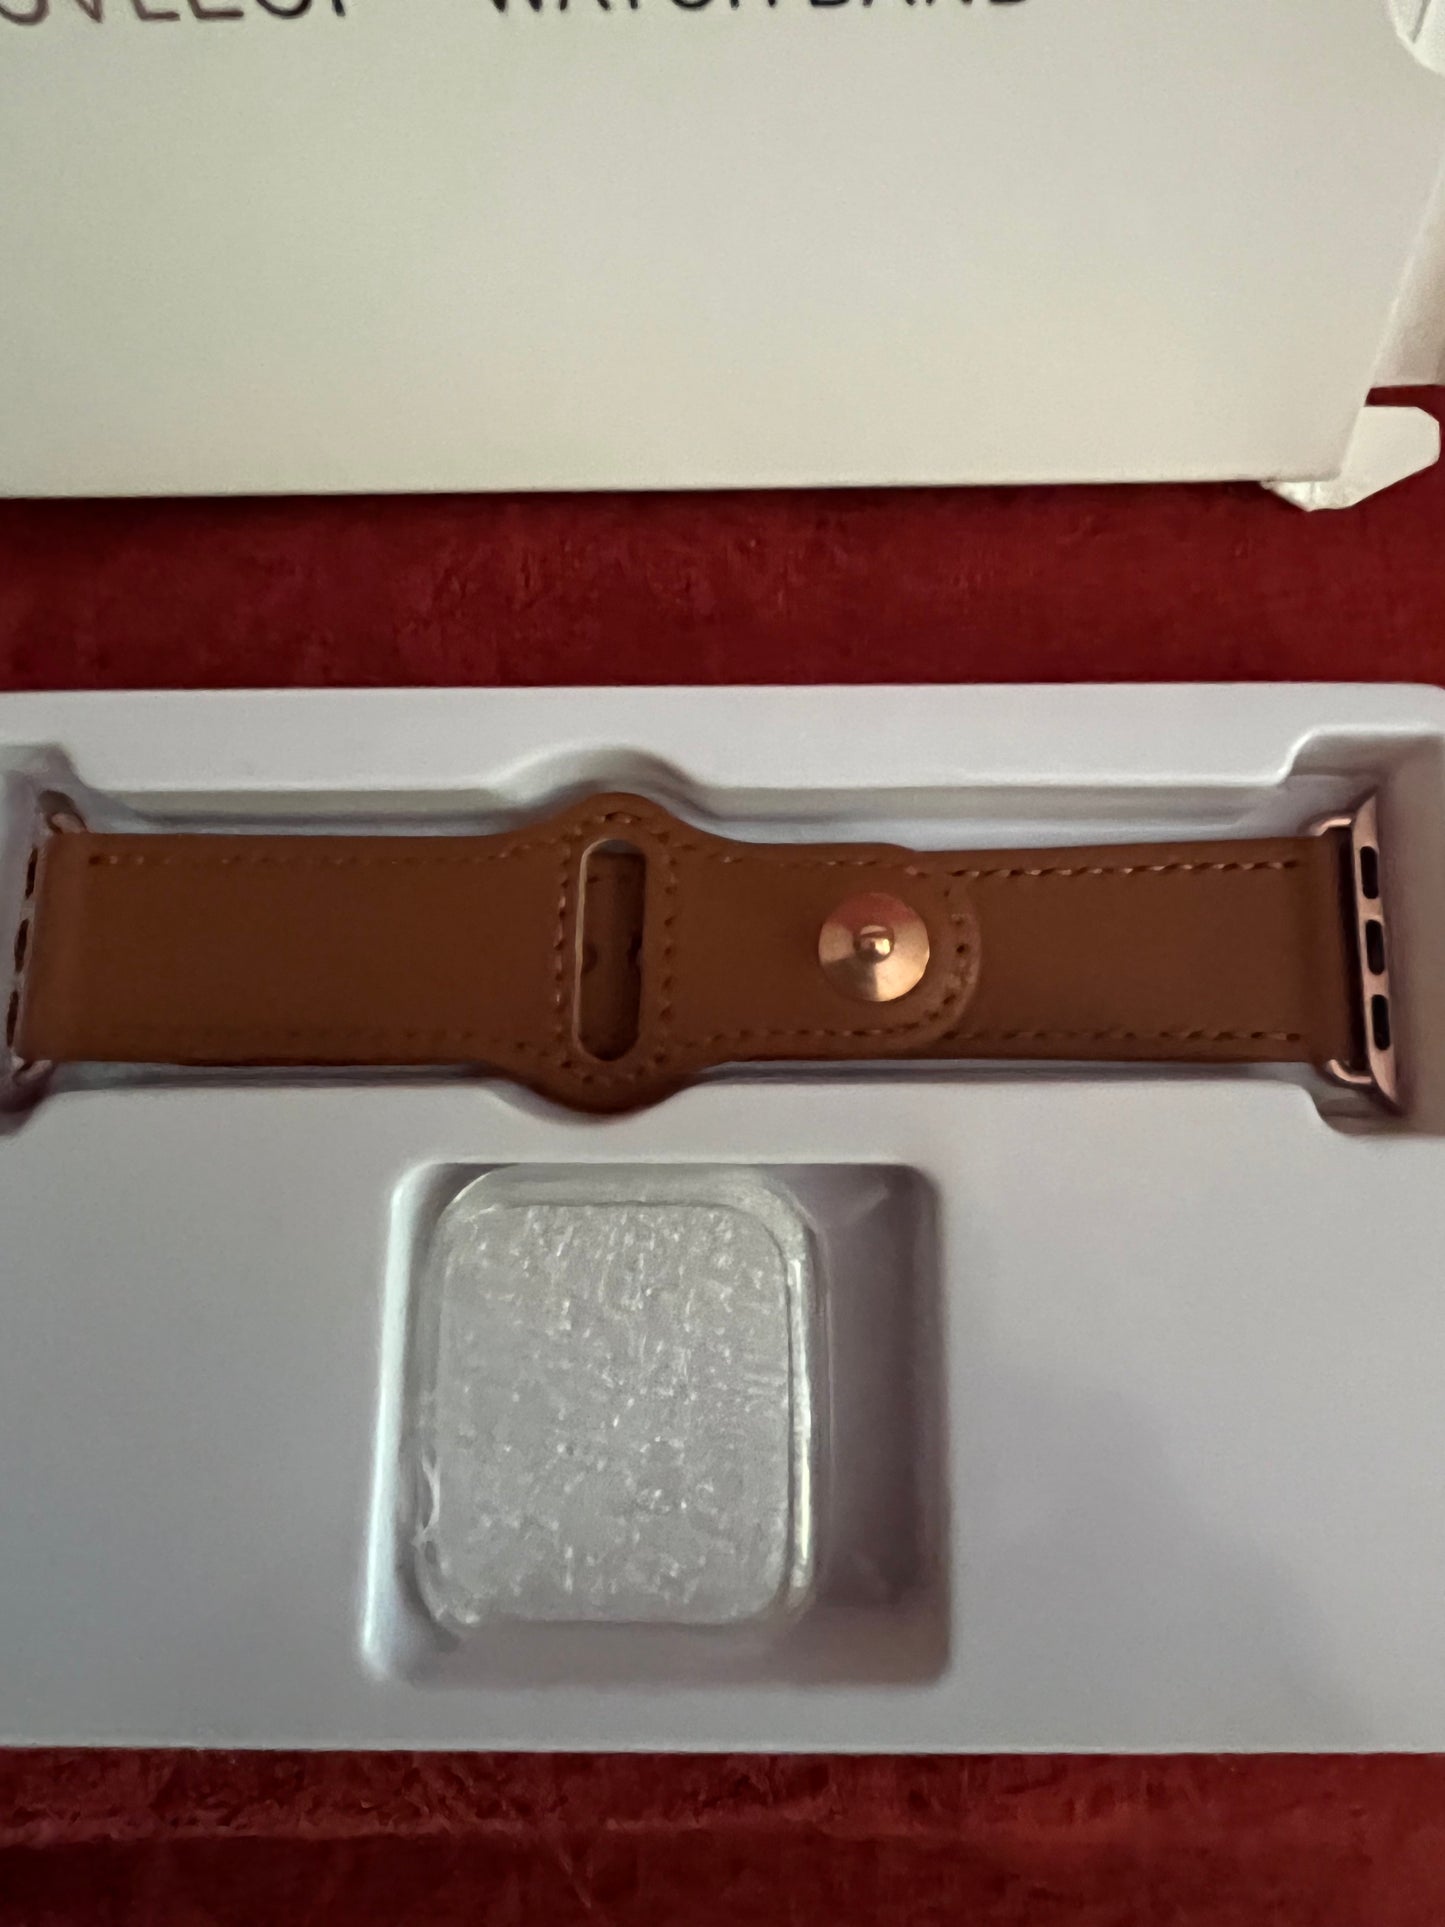 Lovleop Leather Apple Watch Band